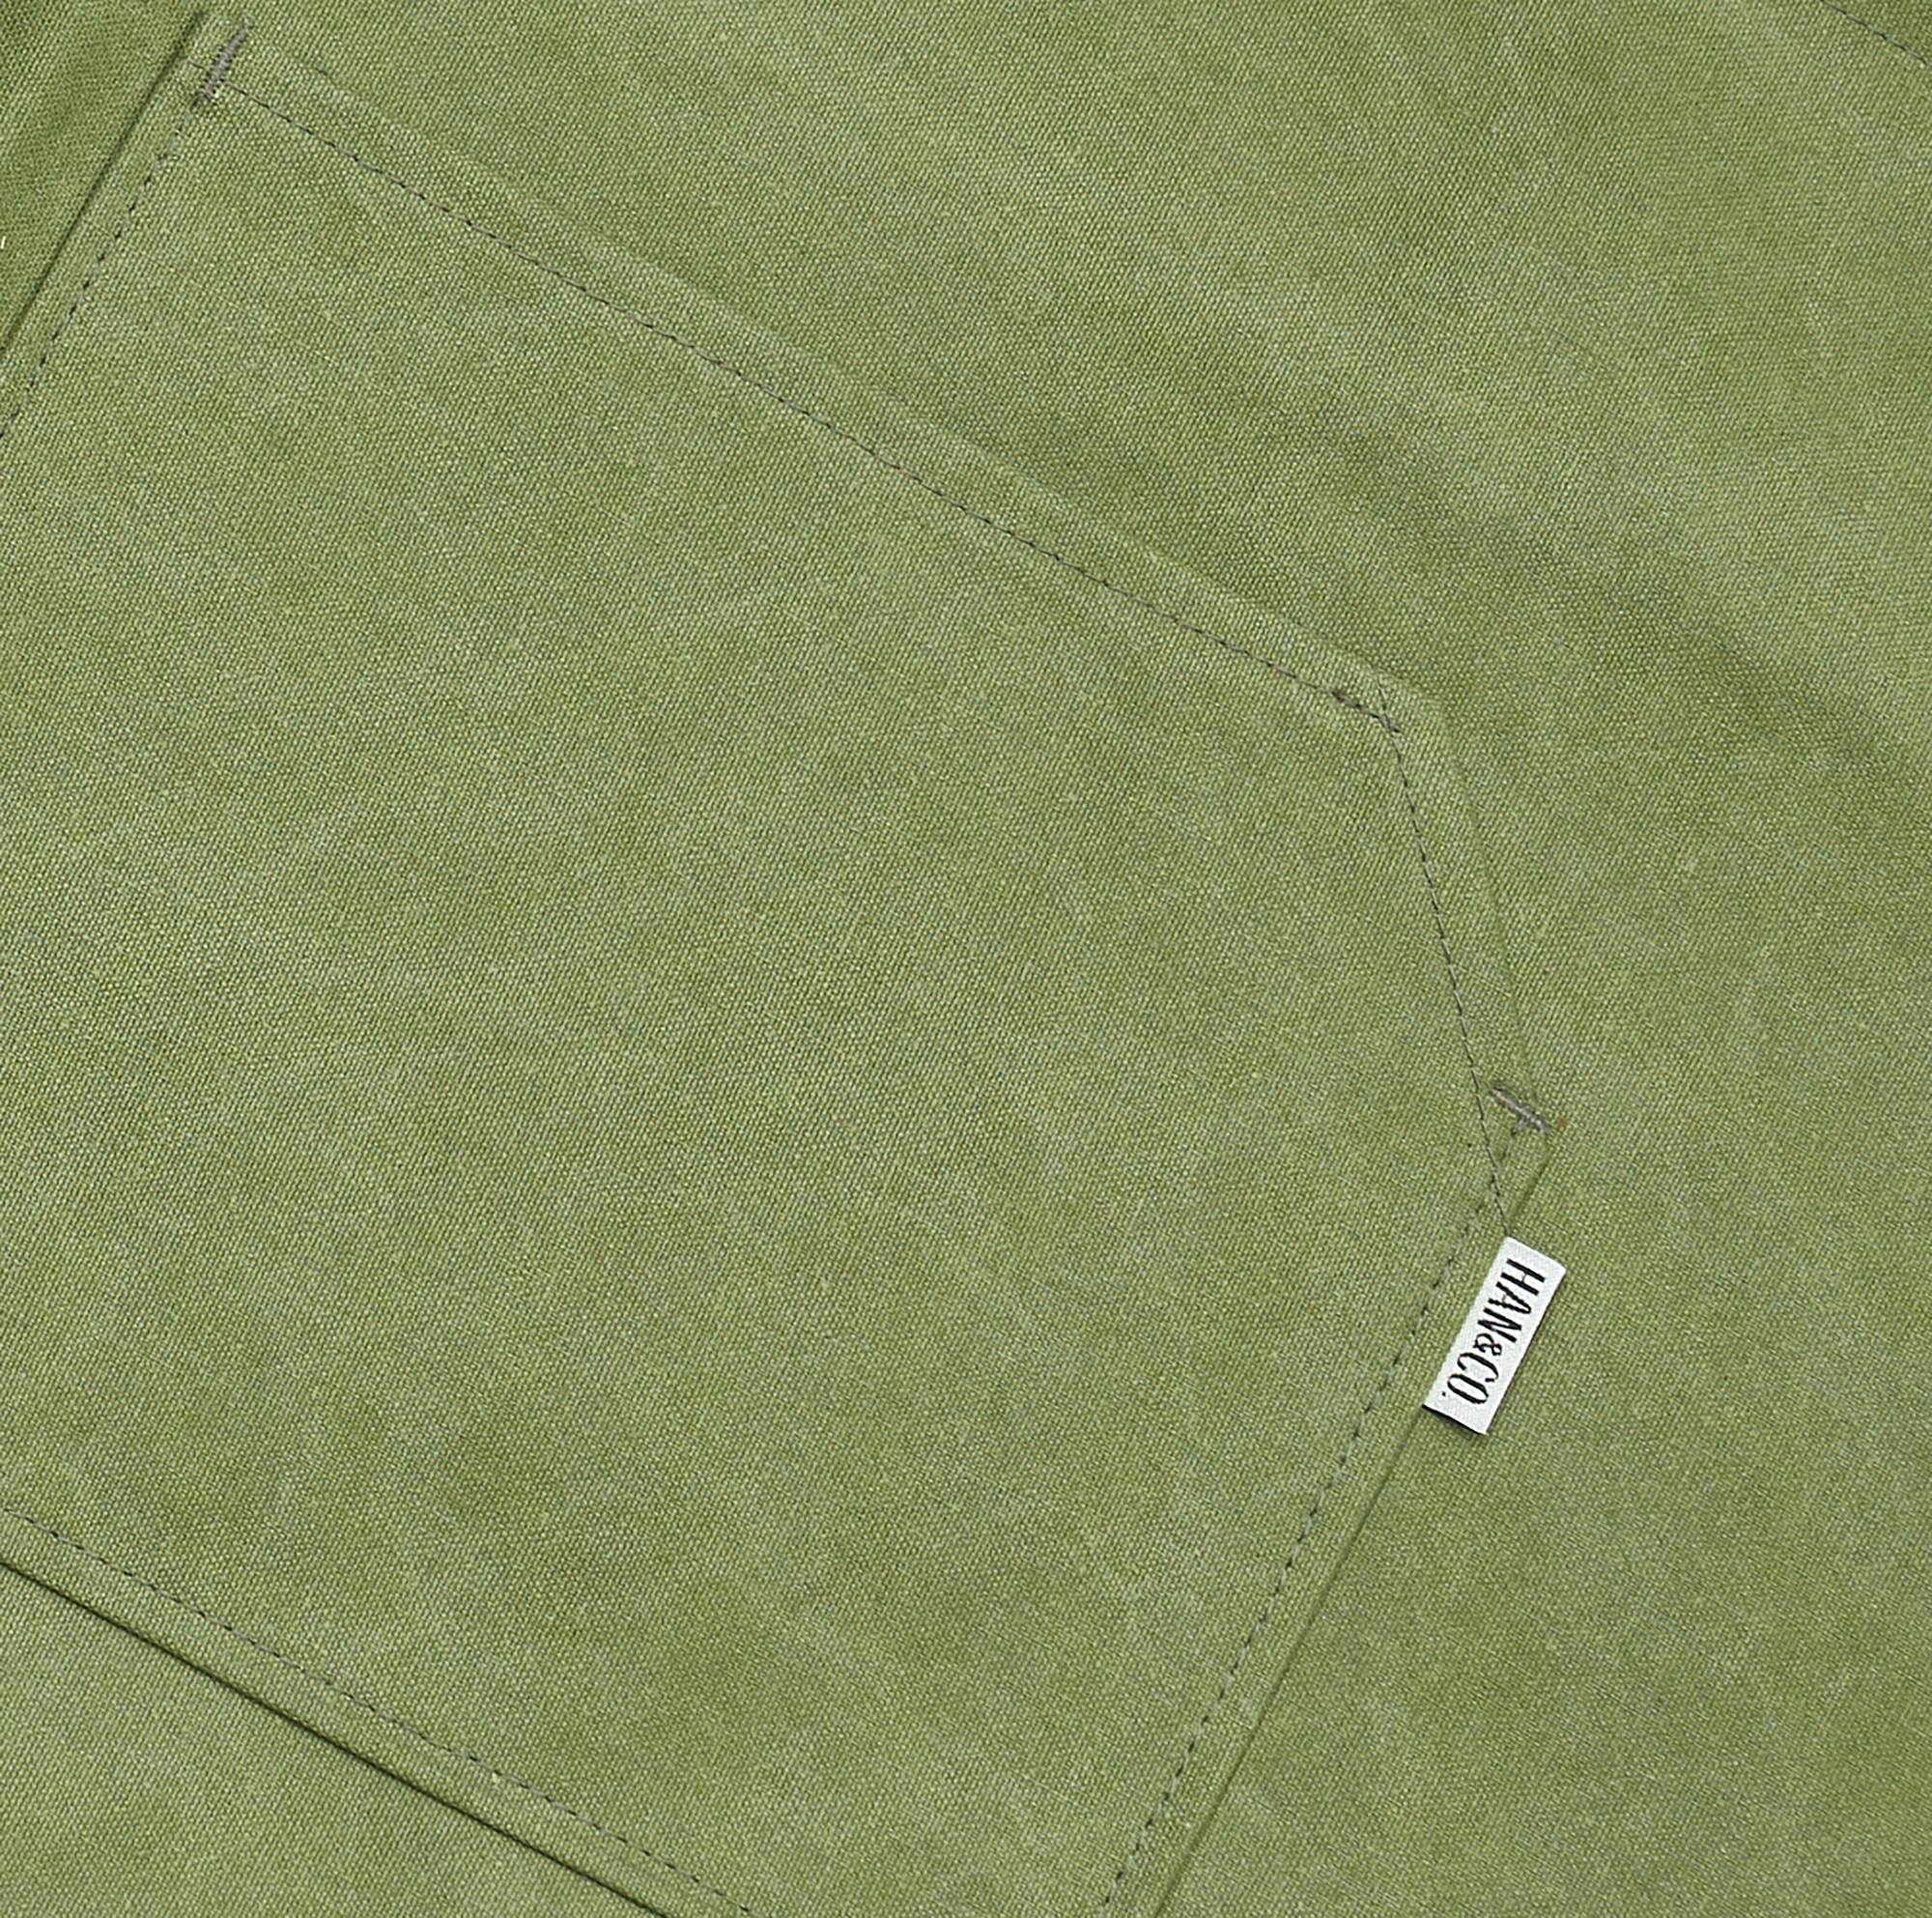 12C Short Apron ผ้ากันเปื้อนตัวสั้น (Grass Green, เขียวอ่อน)